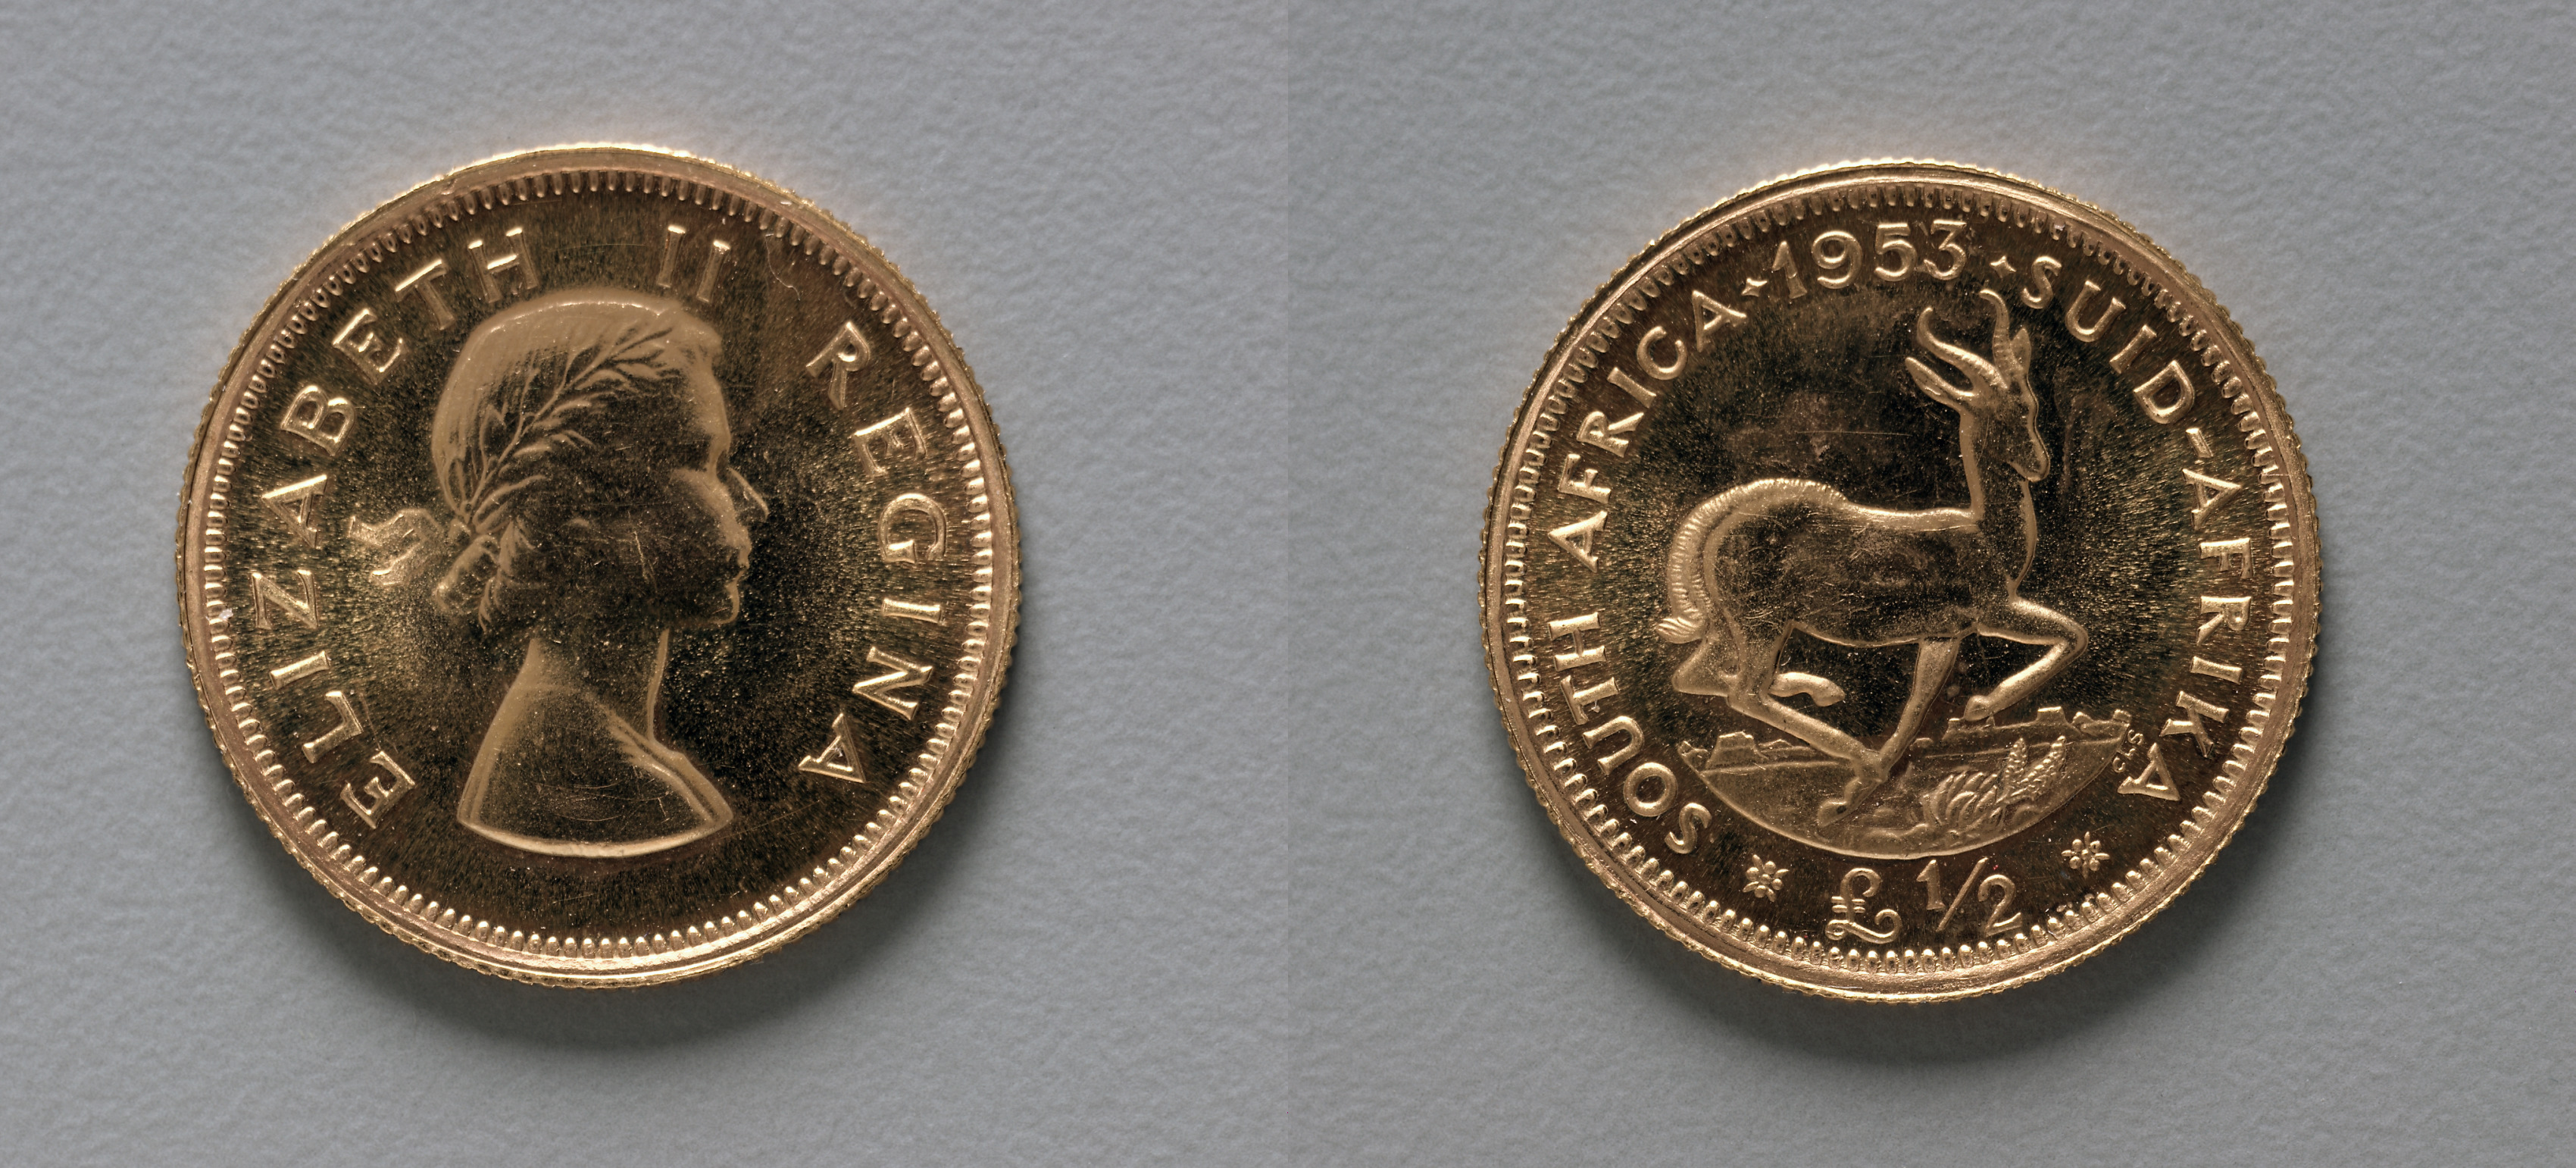 Half Pound: Elizabeth II (obverse); Springbok (reverse)